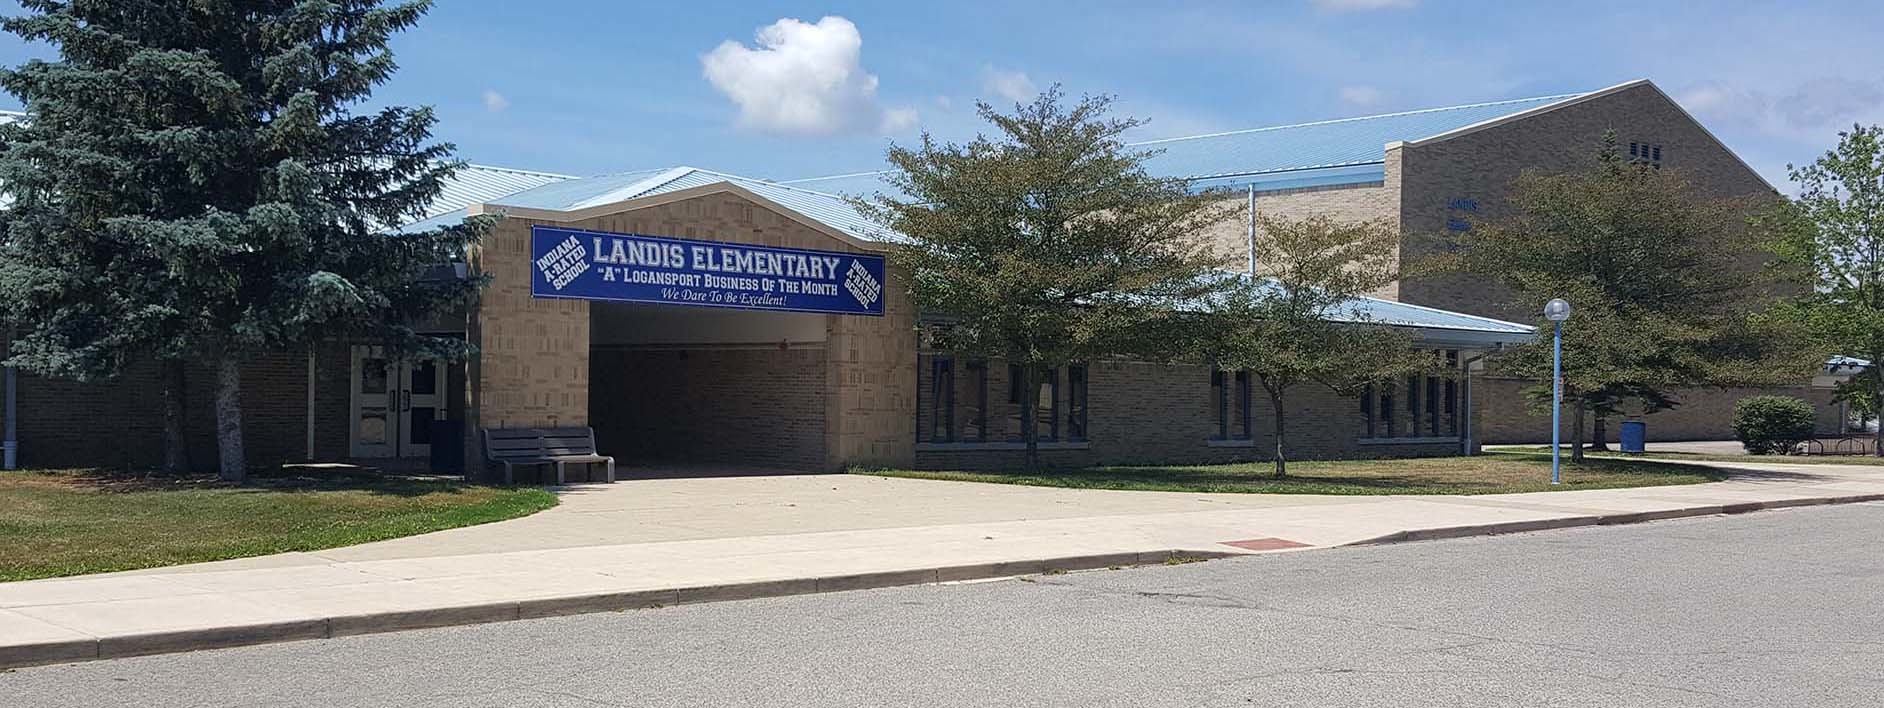 Exterior view of Landis Elementary